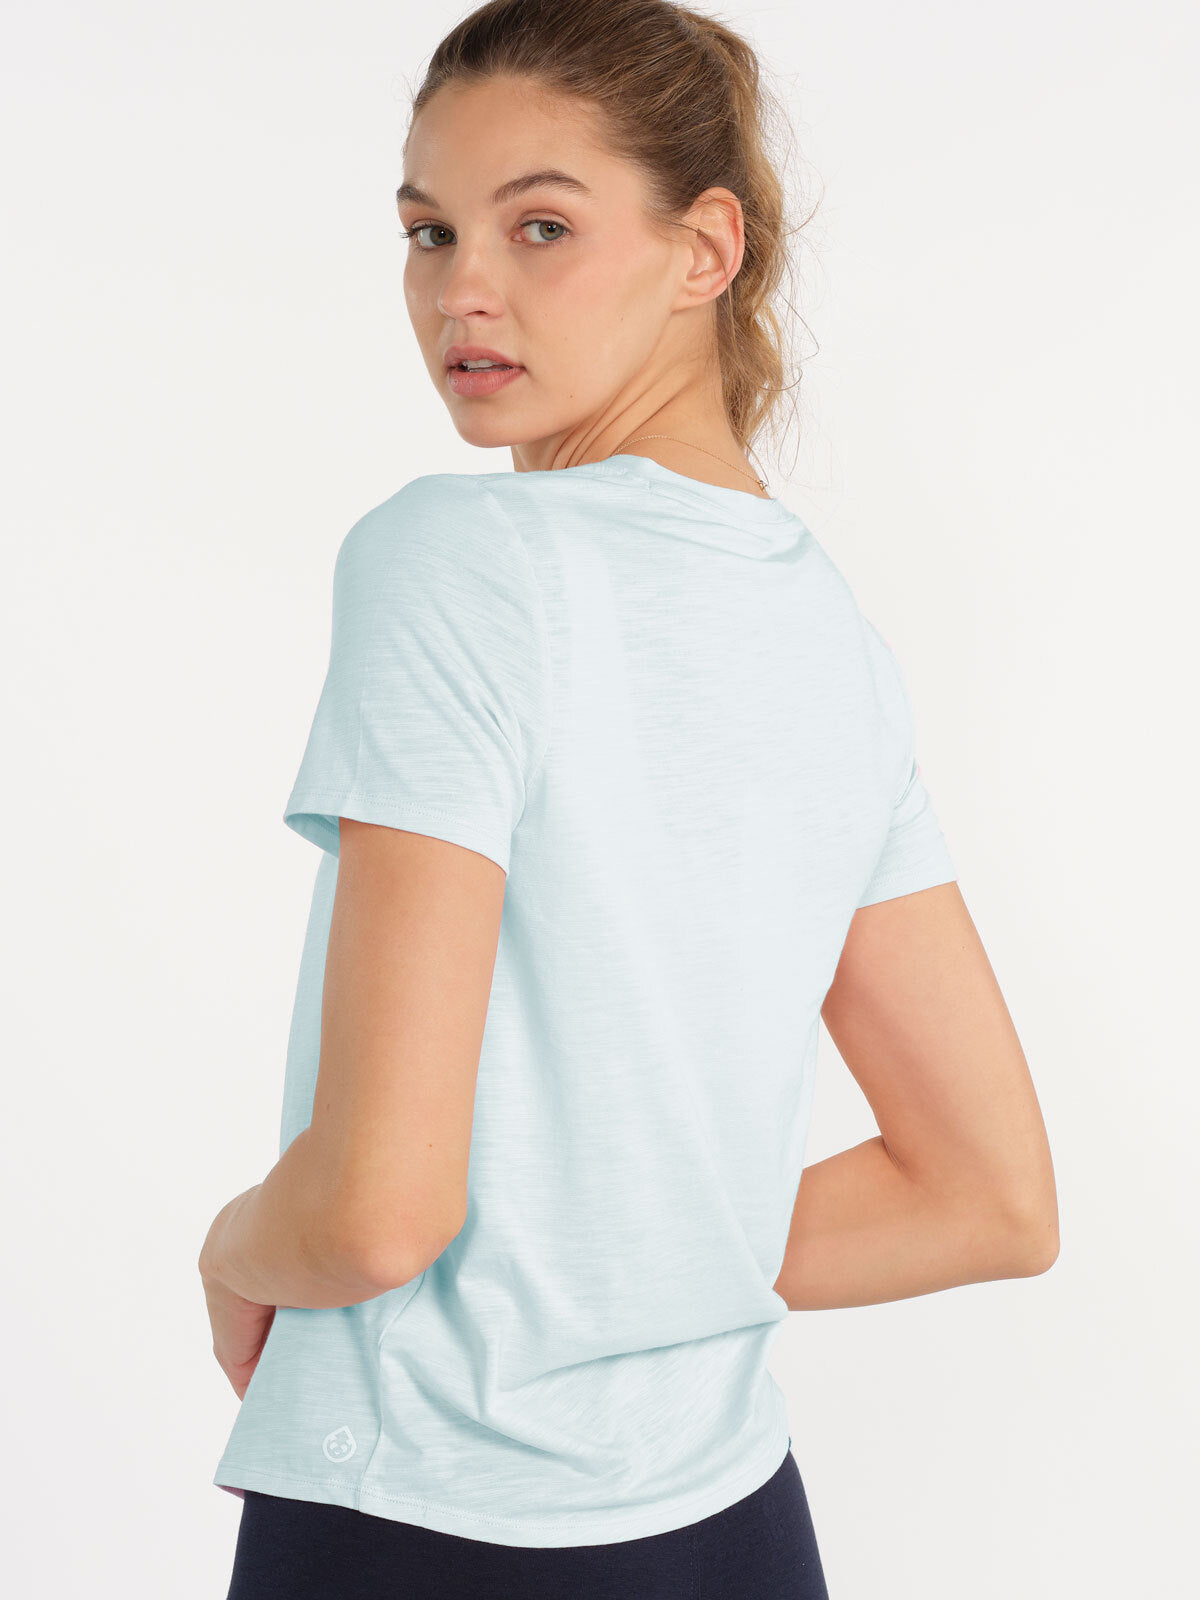 Women's T-Shirt Tight Fit High-Neck Organic Cotton